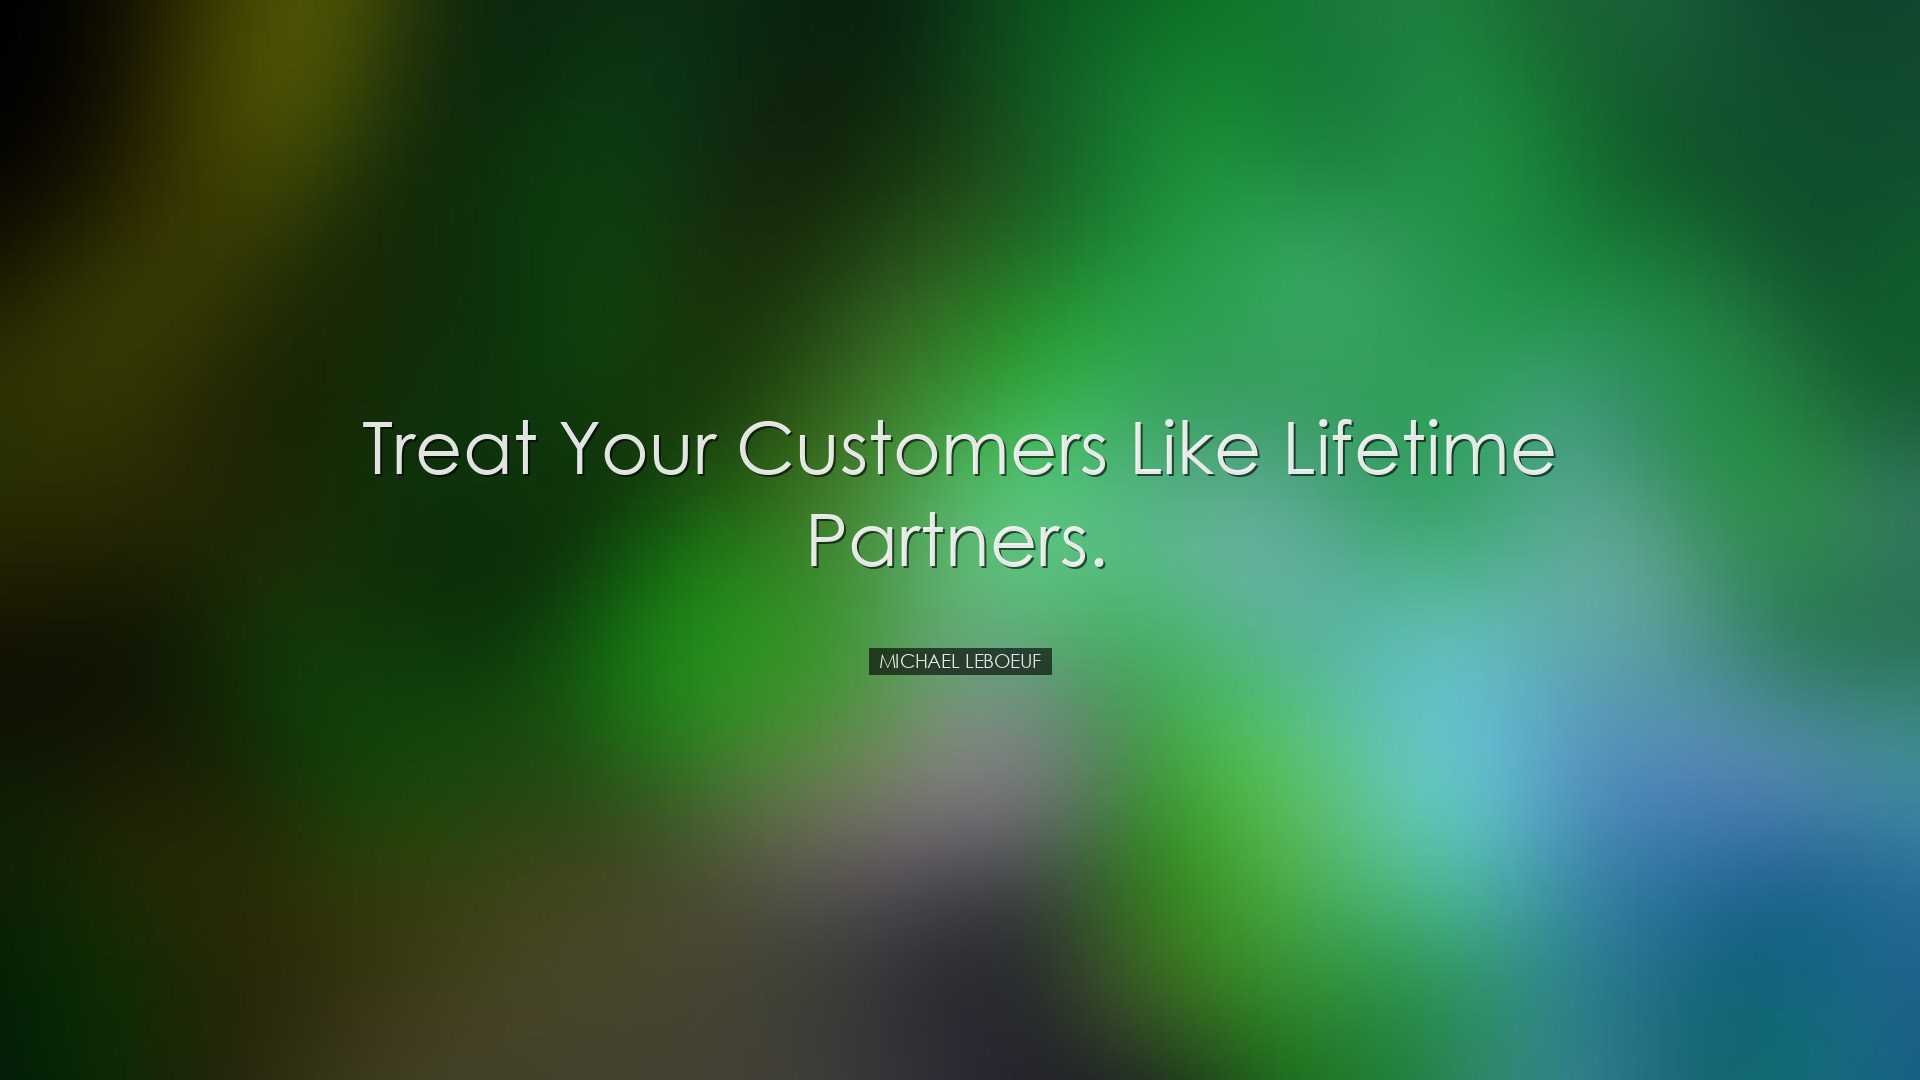 Treat your customers like lifetime partners. - Michael Leboeuf